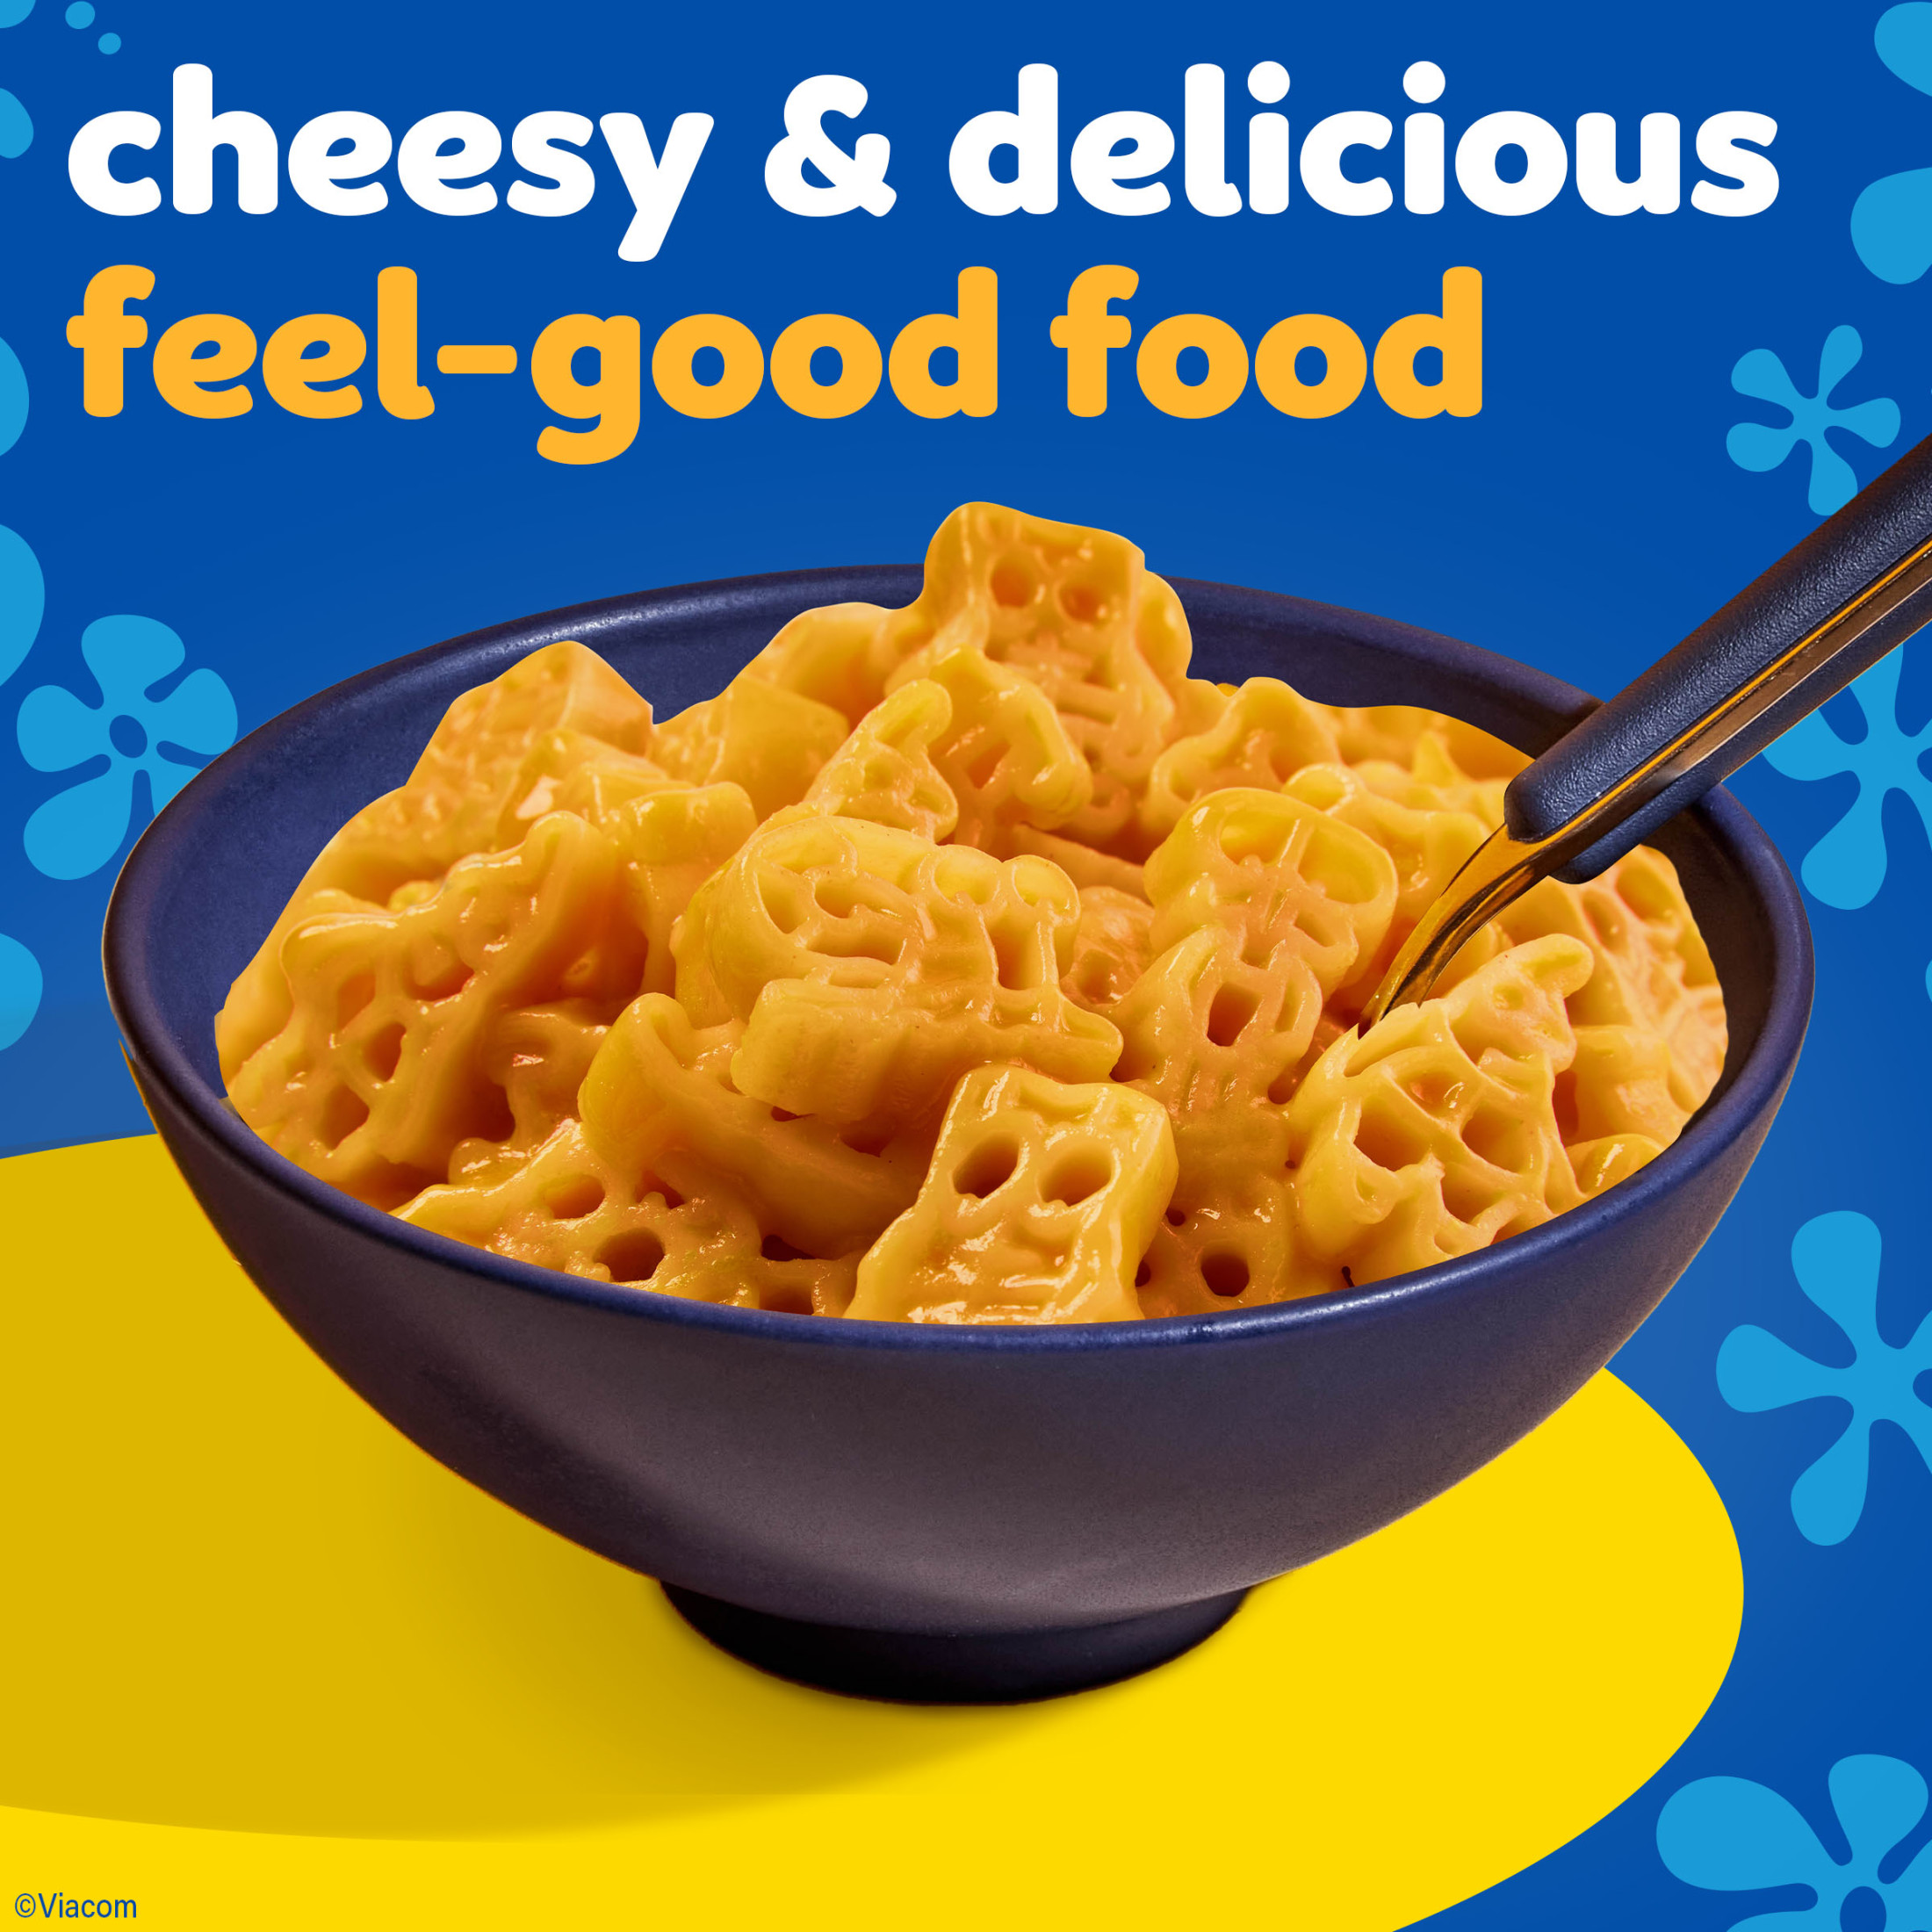 Kraft Mac & Cheese Macaroni and Cheese Dinner SpongeBob SquarePants, 5.5 oz Box - image 5 of 15